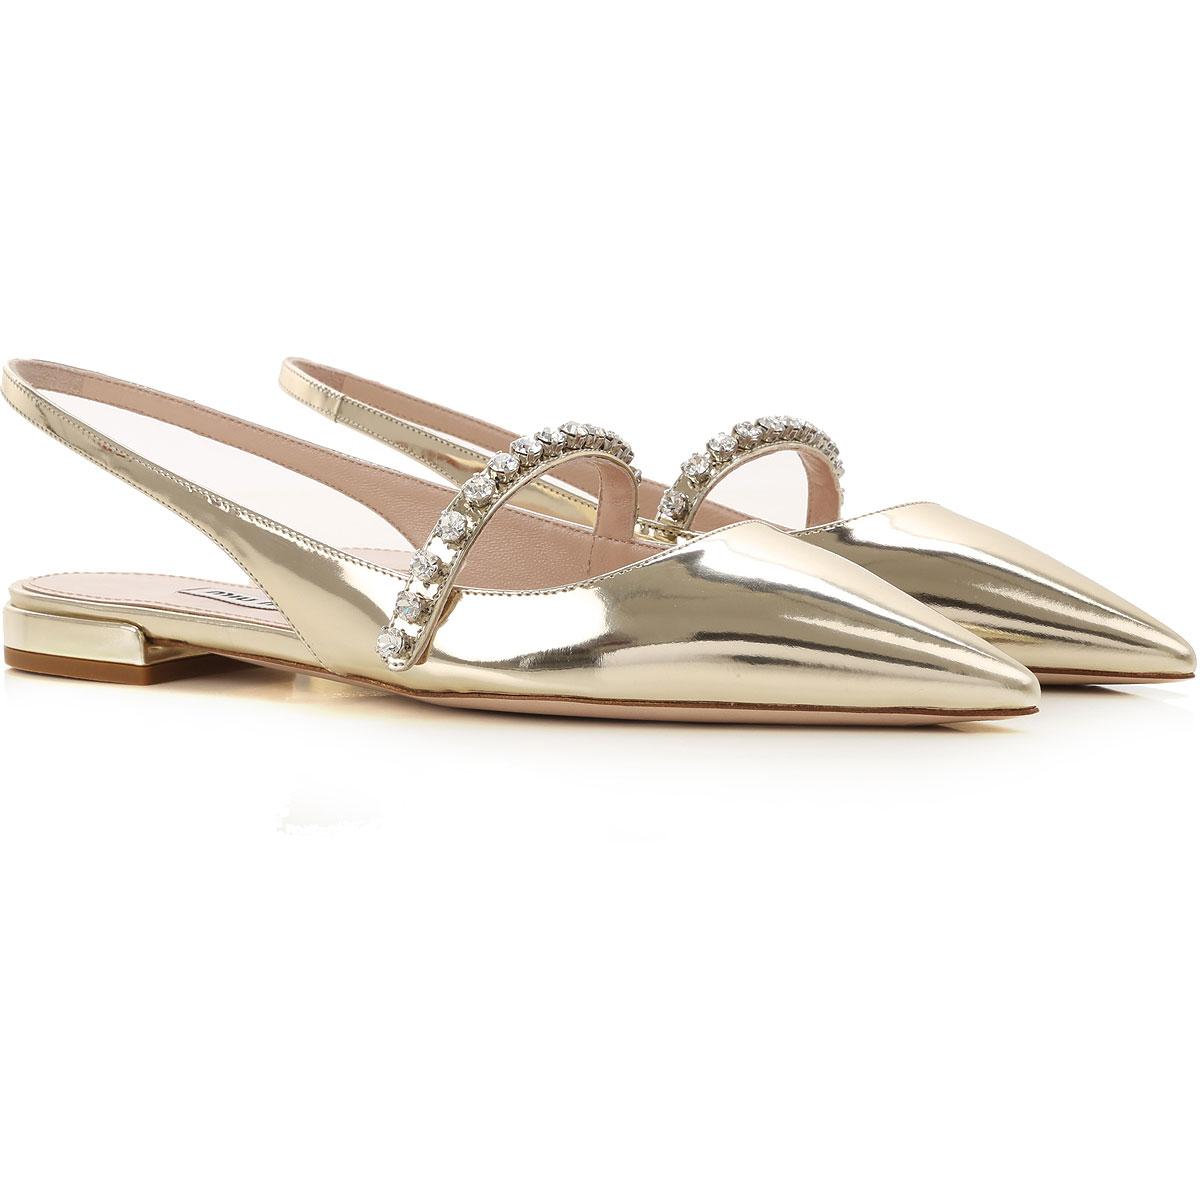 Lyst - Miu Miu Ballet Flats Ballerina Shoes For Women in Metallic